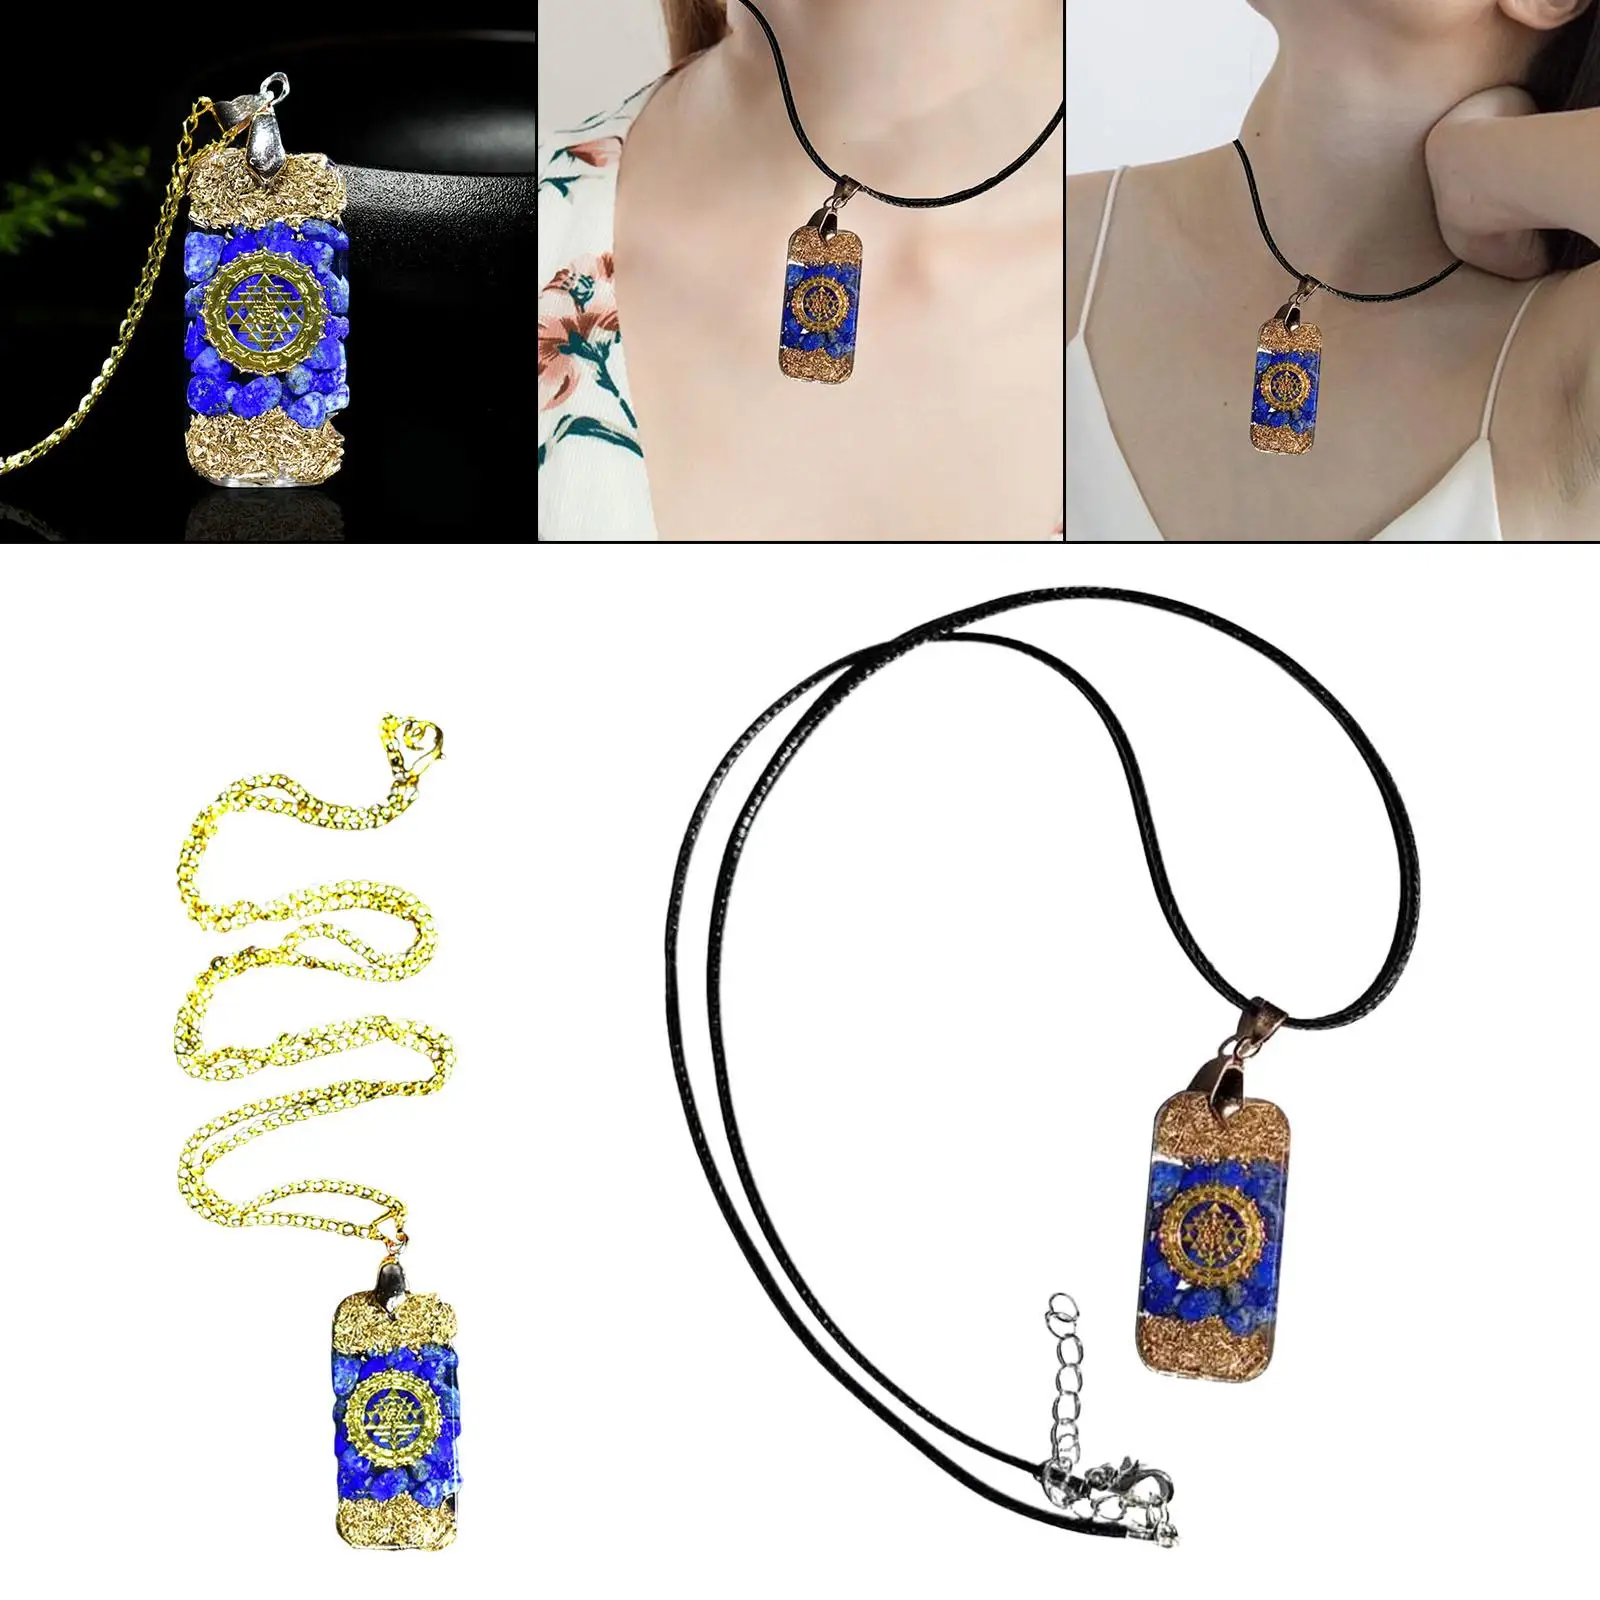 Chakra Pendant Necklace, Positive Energy Generator, Relaxing Necklace Purification Pendant, Protection Amulet for Women Men